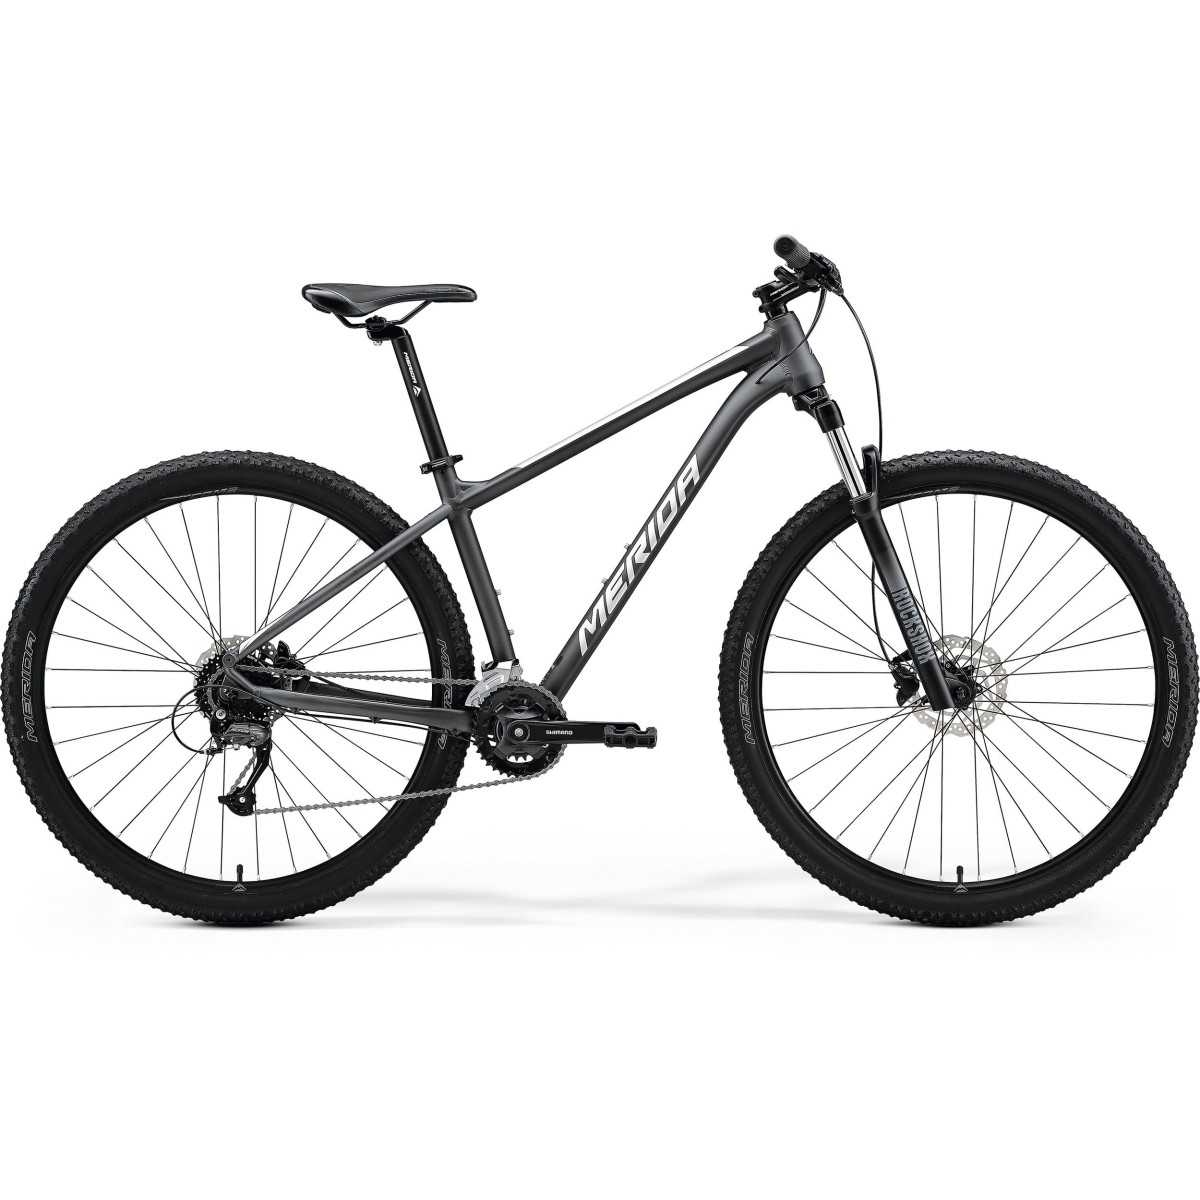 MERIDA BIG SEVEN 60-2X bicycle - grey